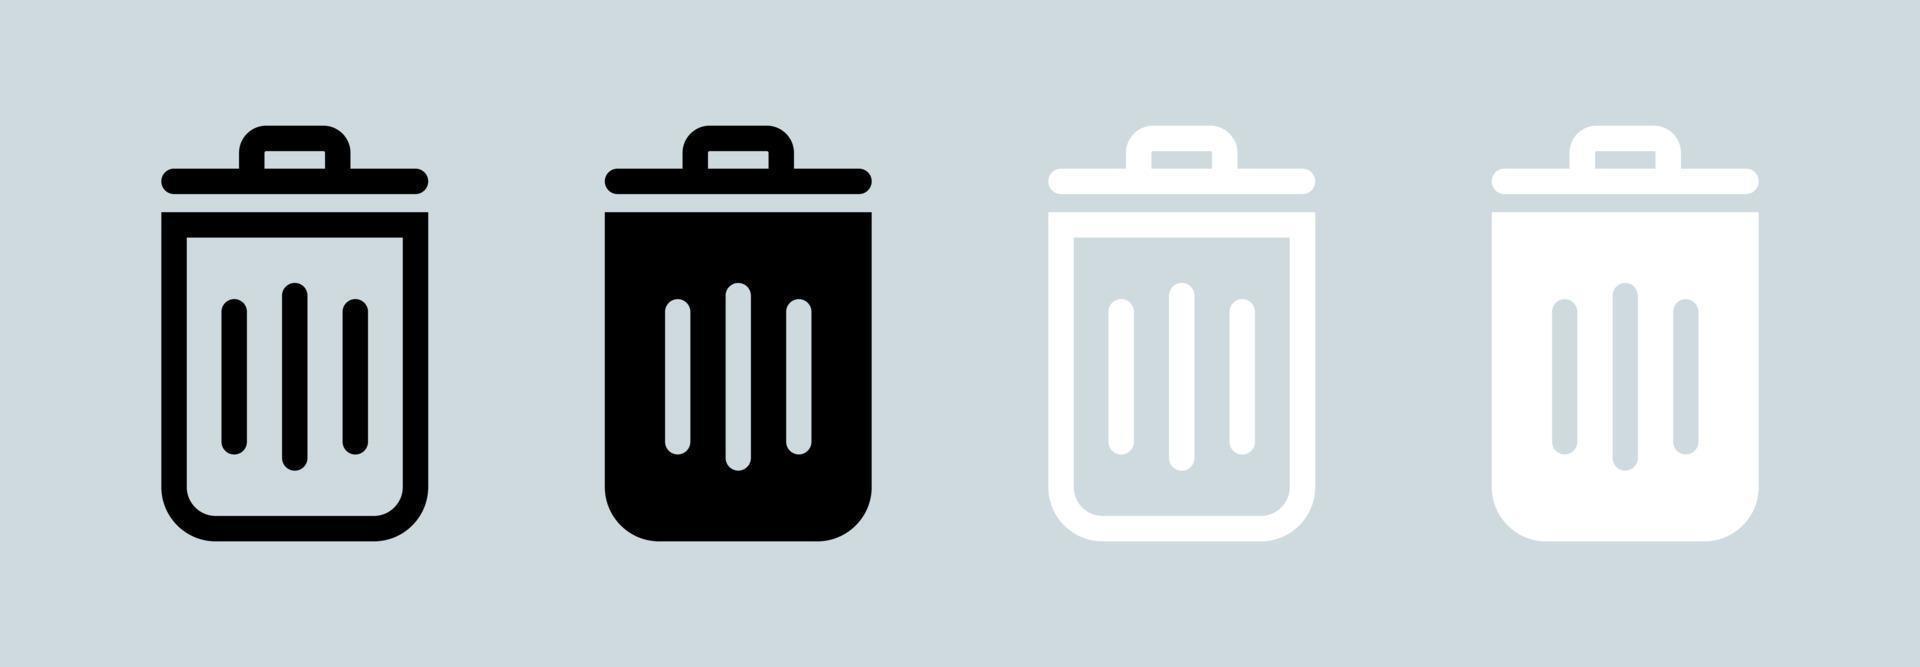 Trash bin icon in black and white colors. Delete signs vector illustration.